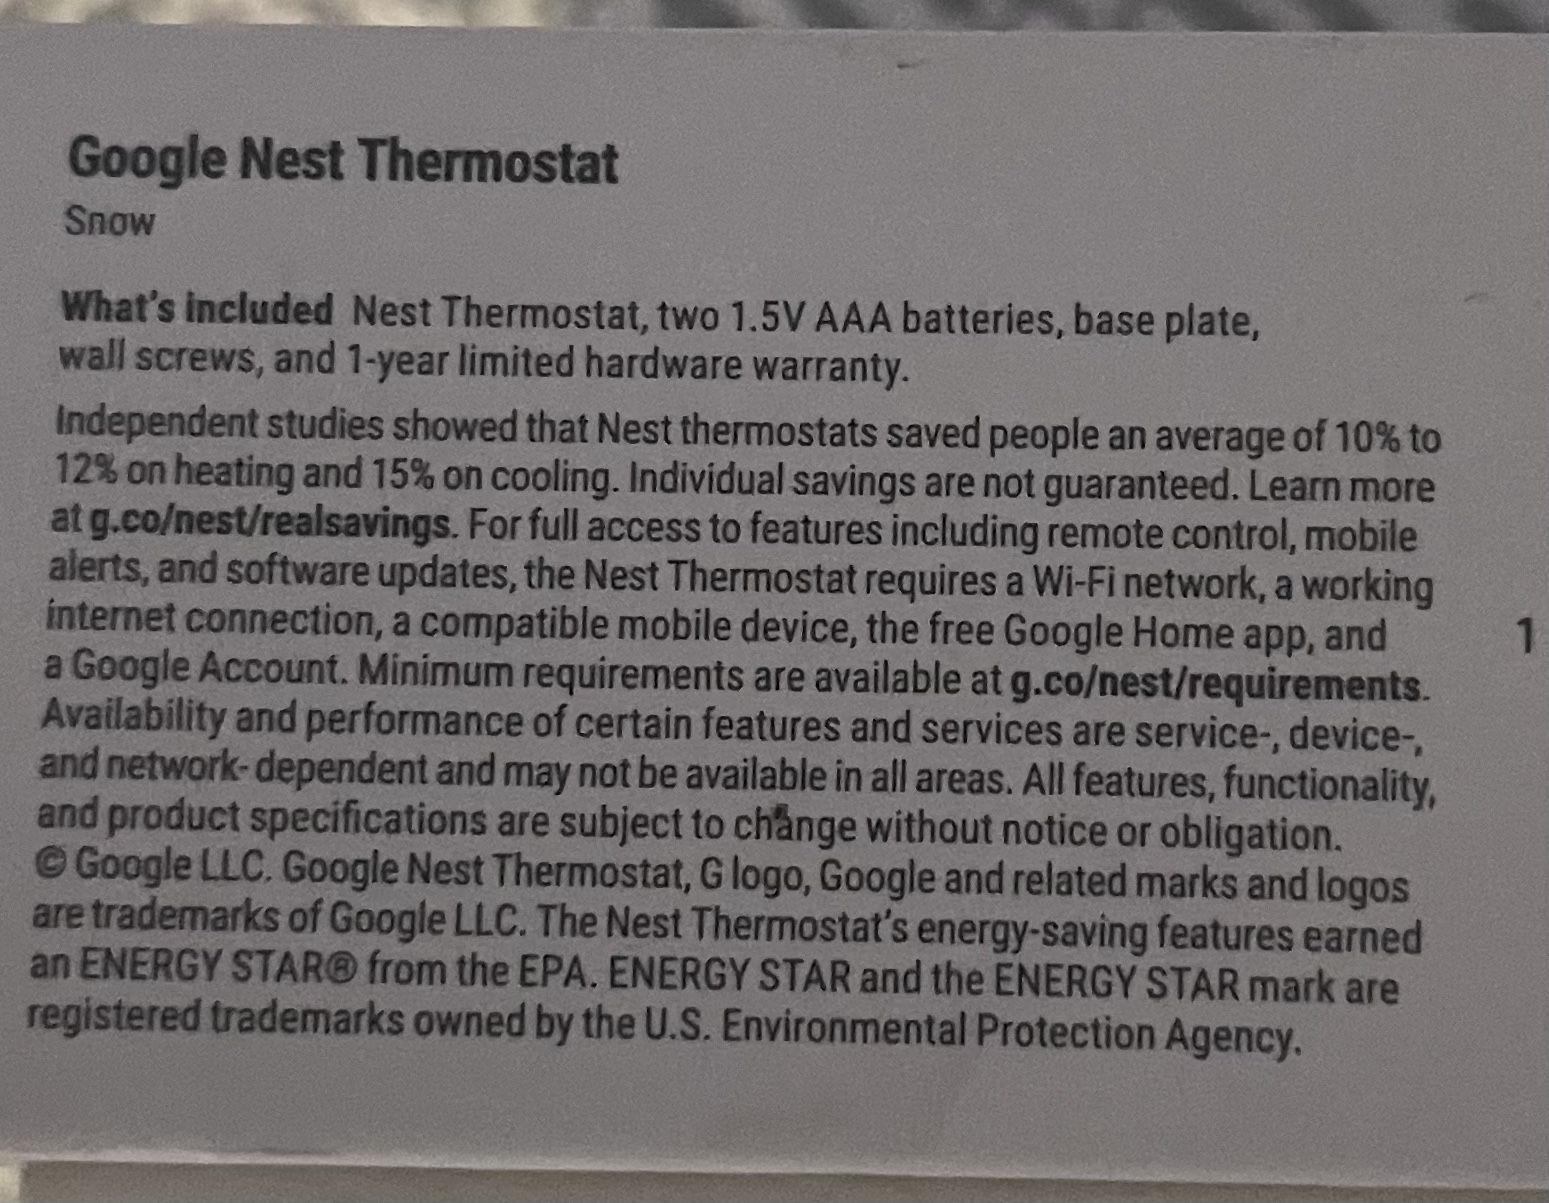 Google Nest Thermostat (color:snow)